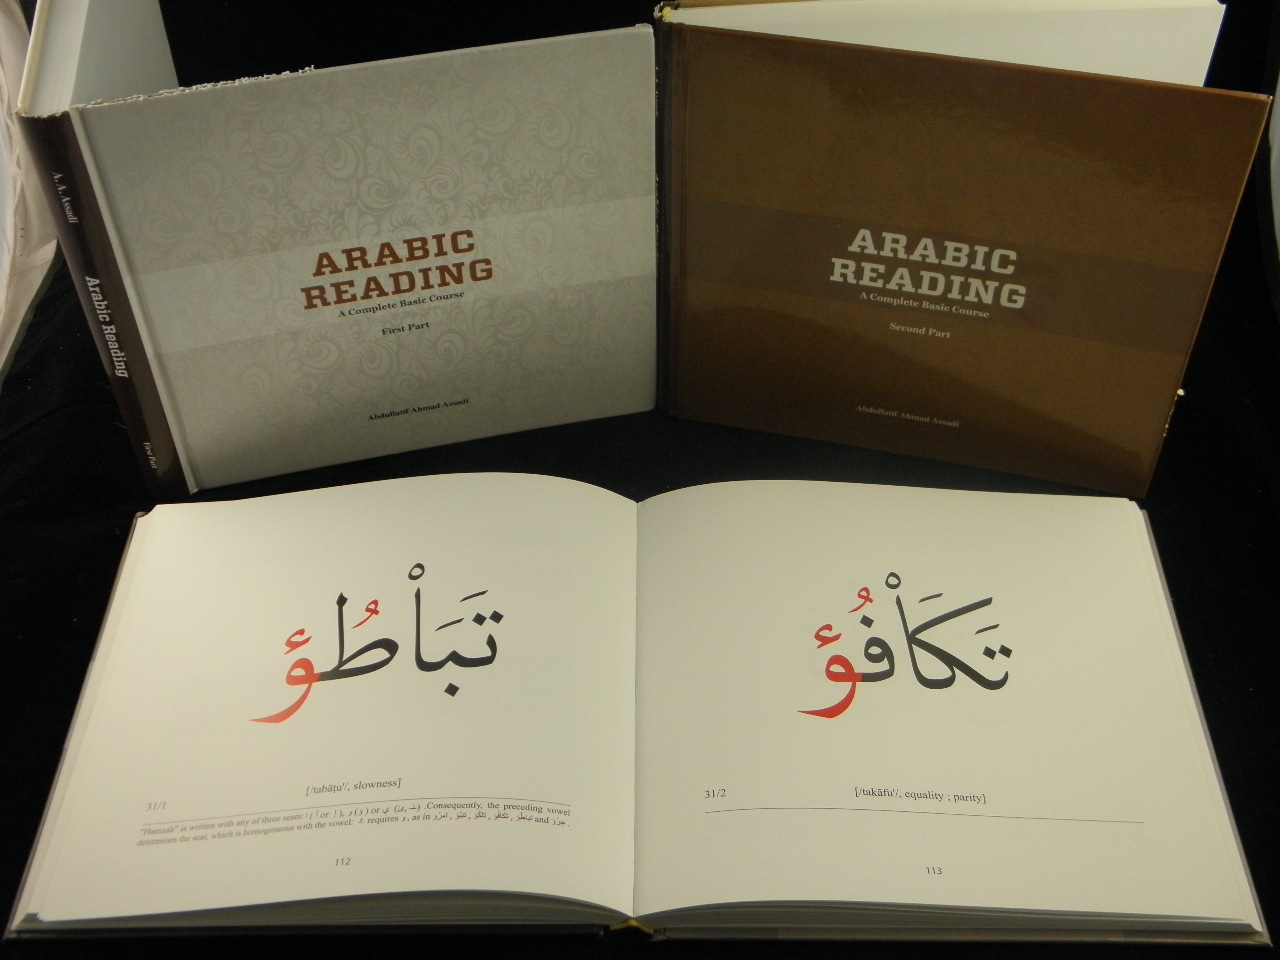 ARABISCH.-   ASSADI, Abdullatif Ahmad: - Arabic Reading.  A Complete Basic Course.